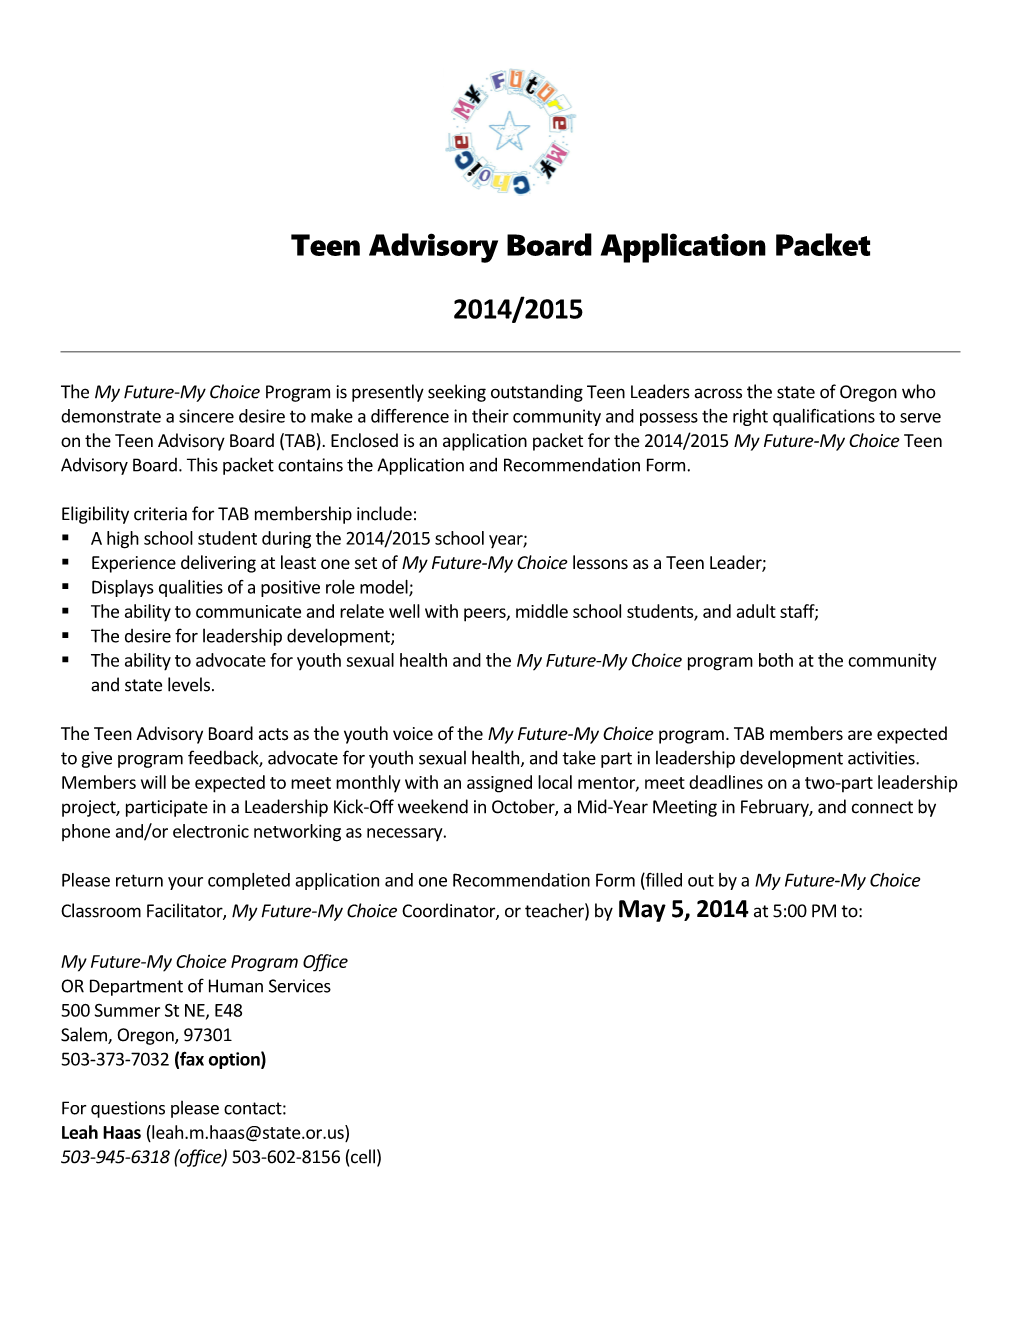 Teen Advisory Board Application Packet 2014-2015